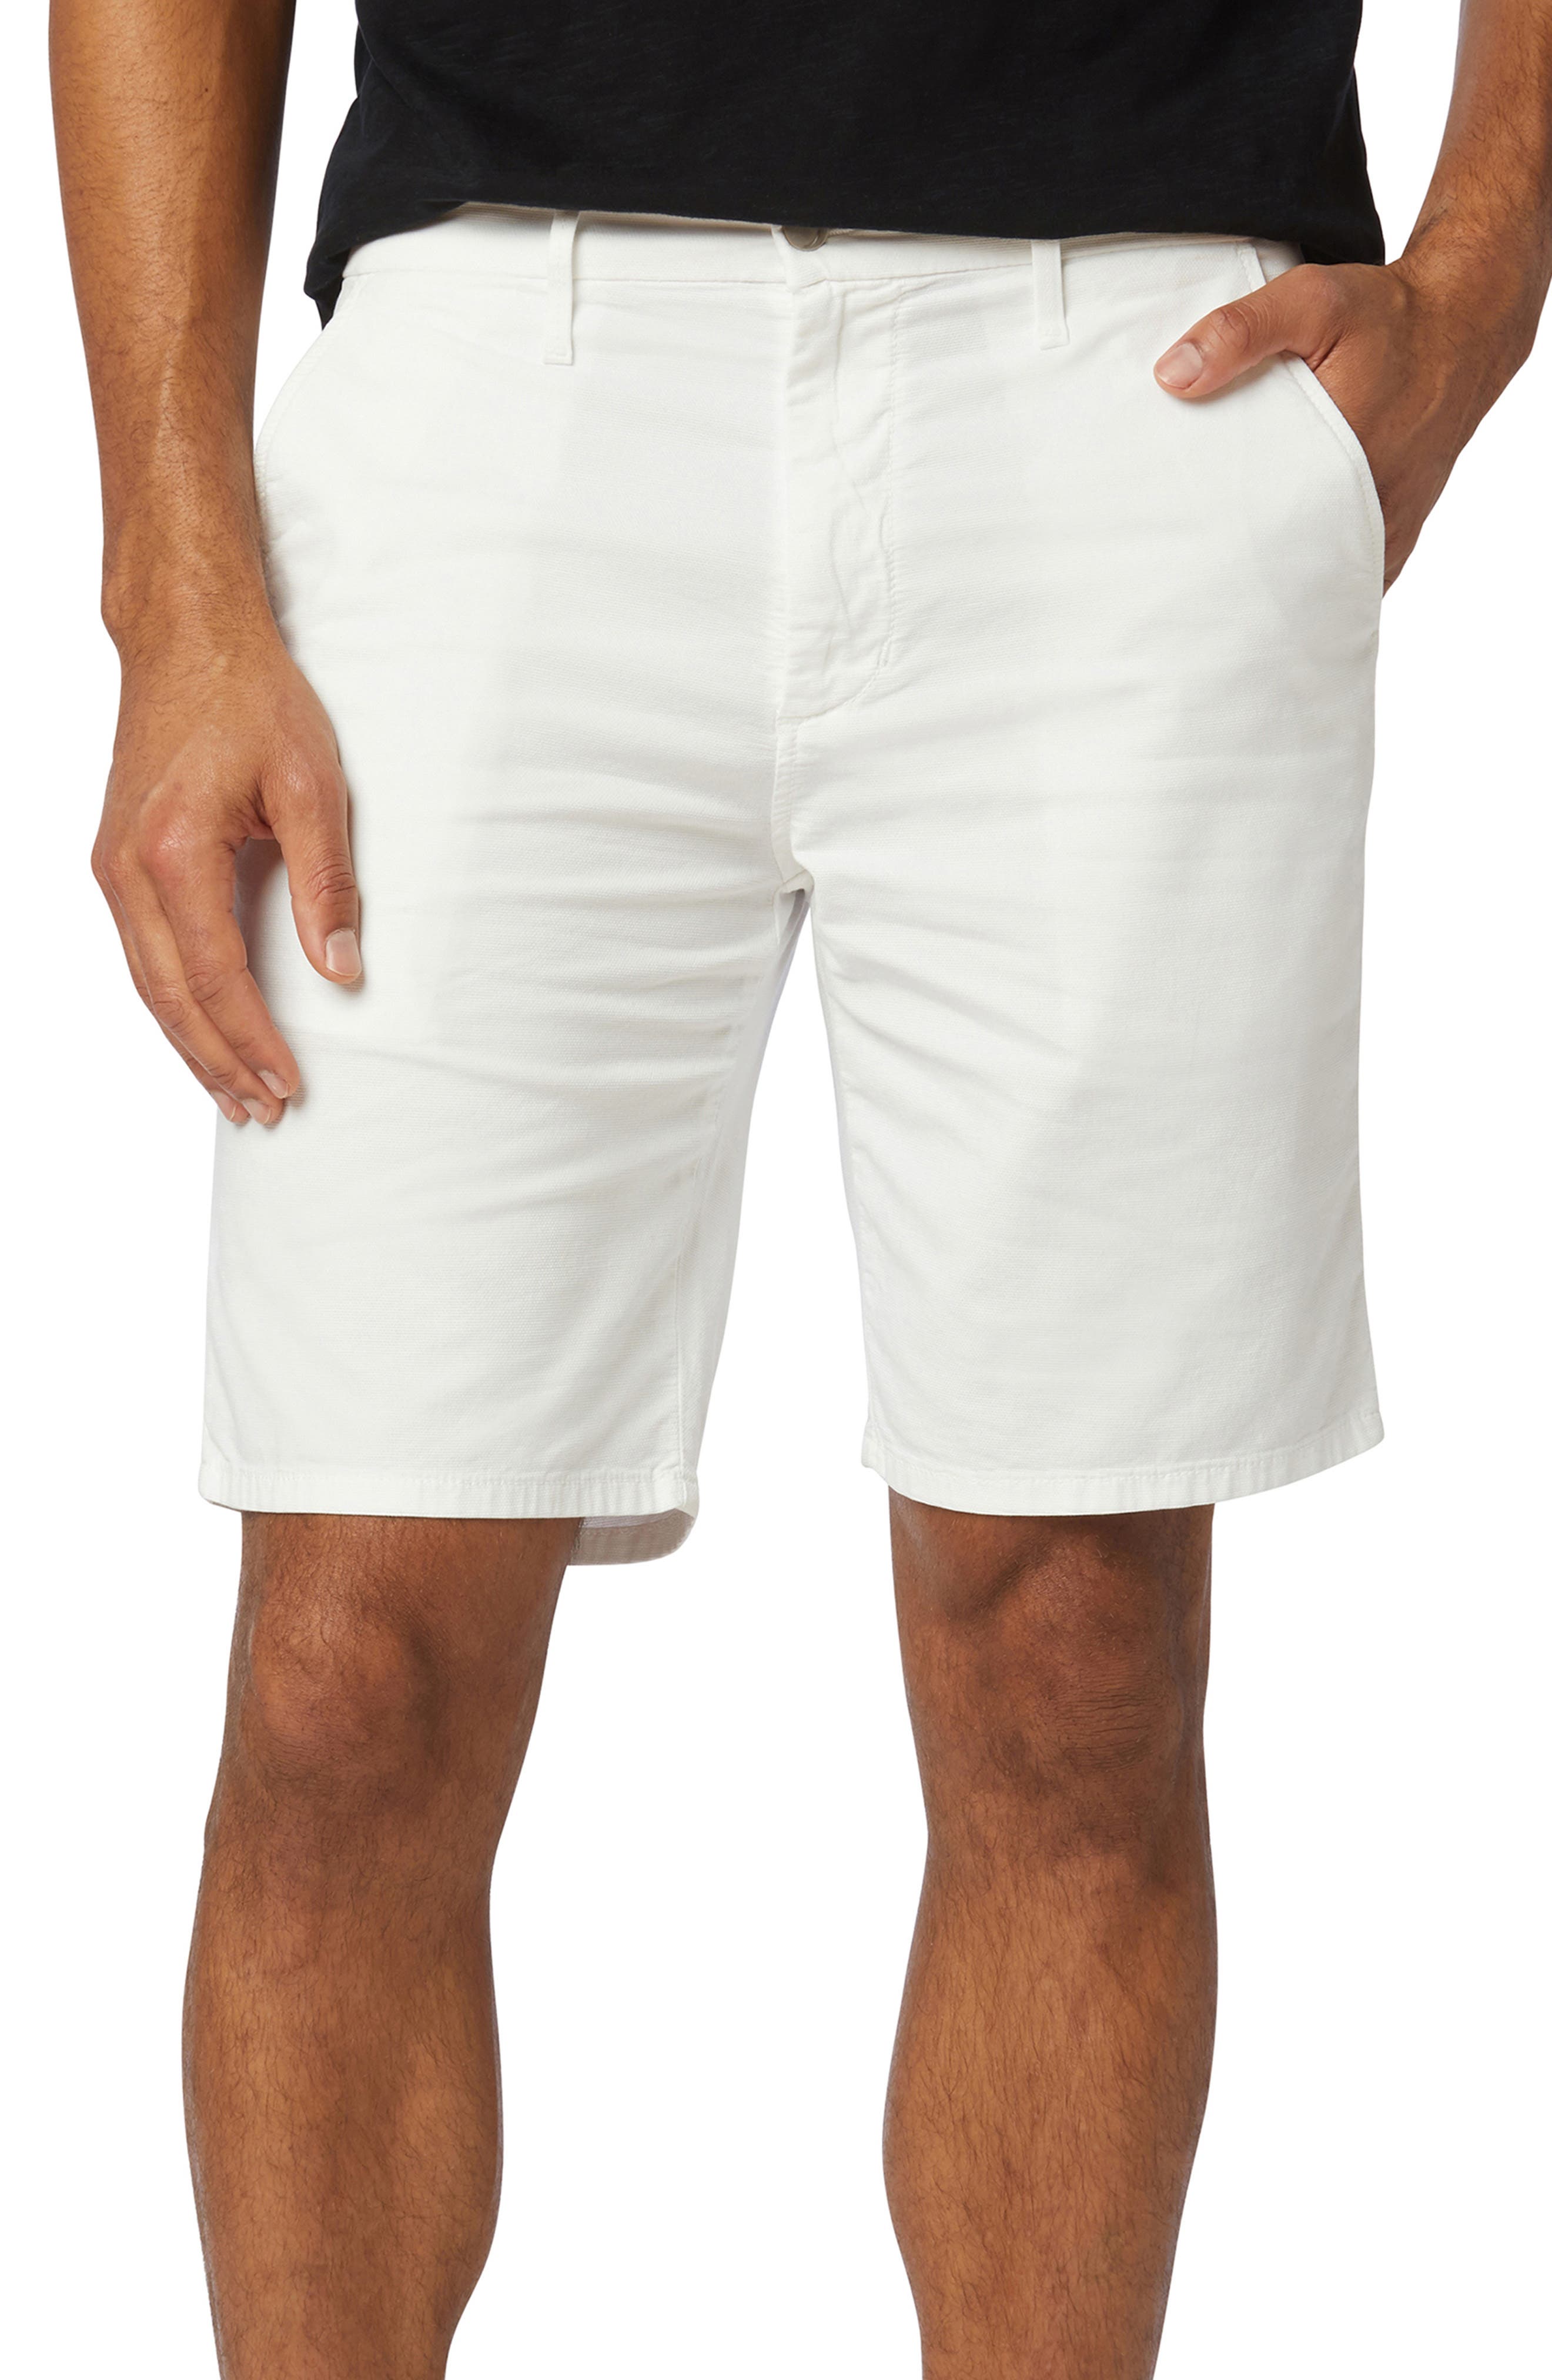 mens white skinny shorts